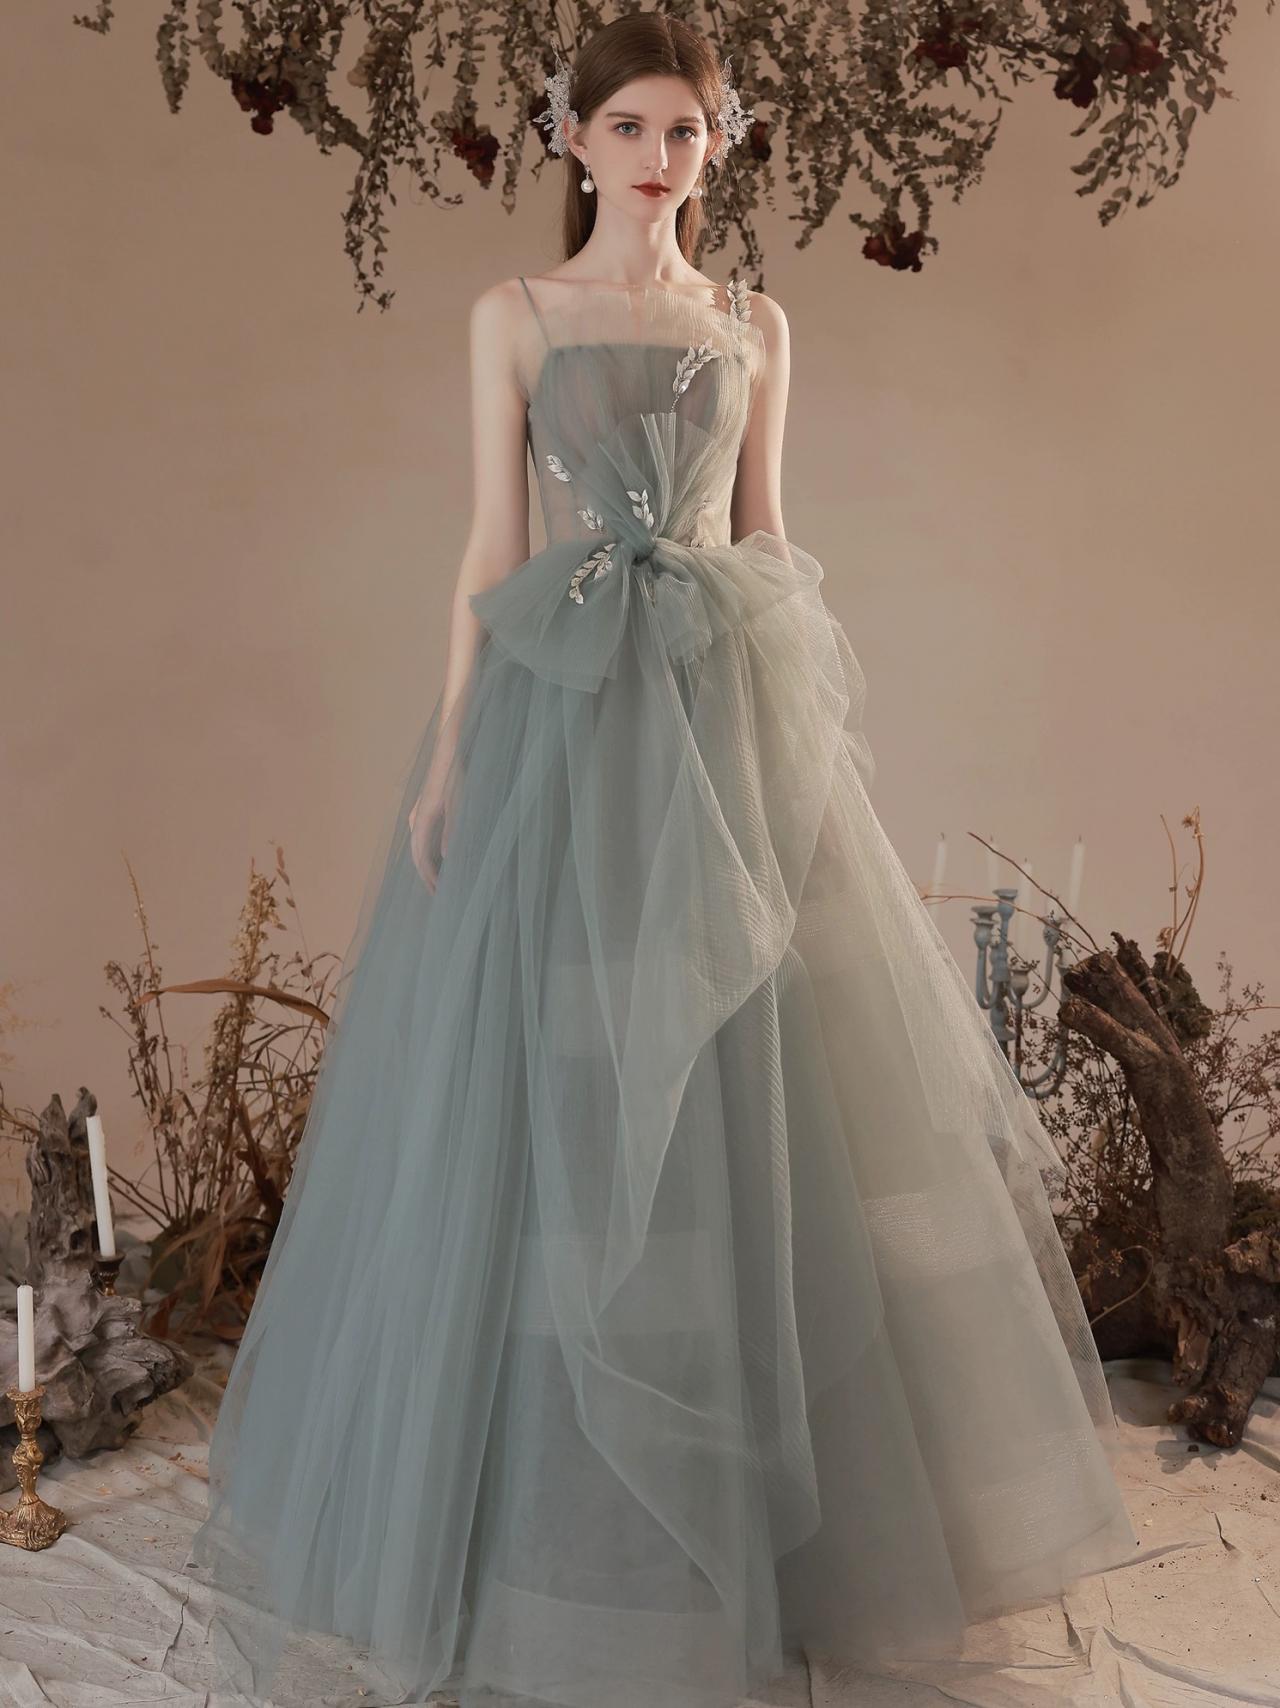 Fairy Fantasy Spaghtti Strap Dress